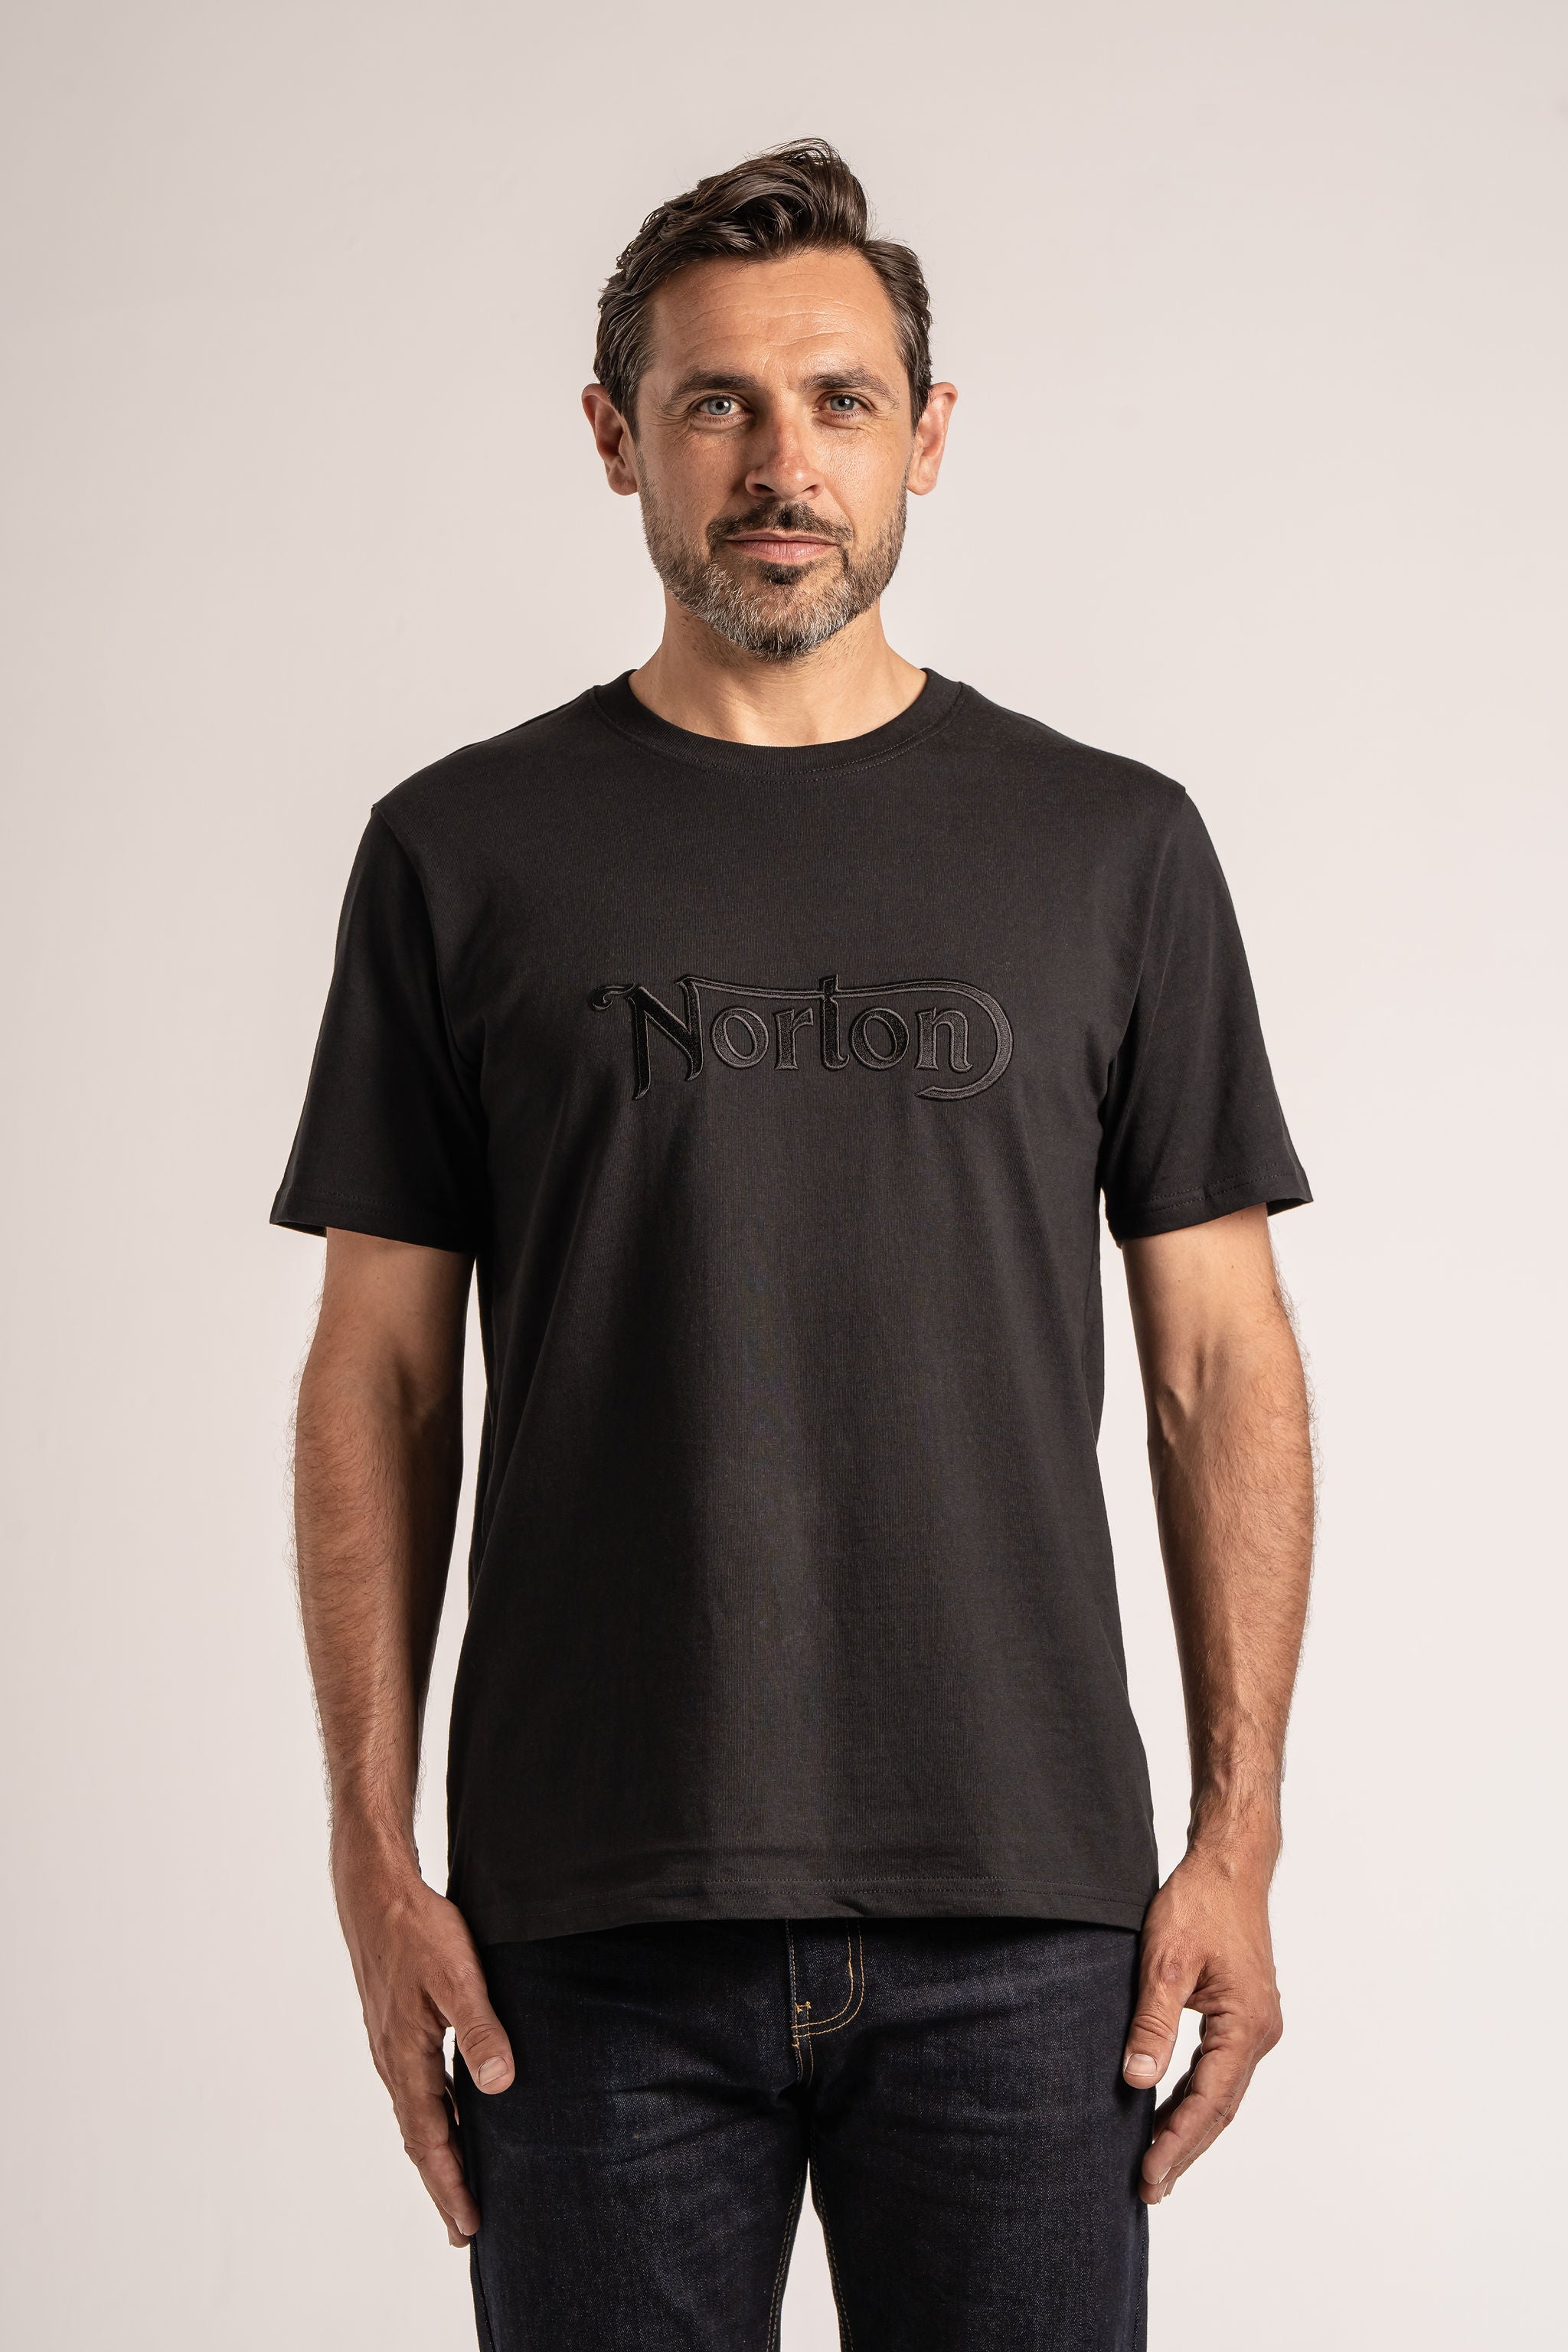 Short Sleeve Black Tee With Large Embroidered Black Logo - Unisex